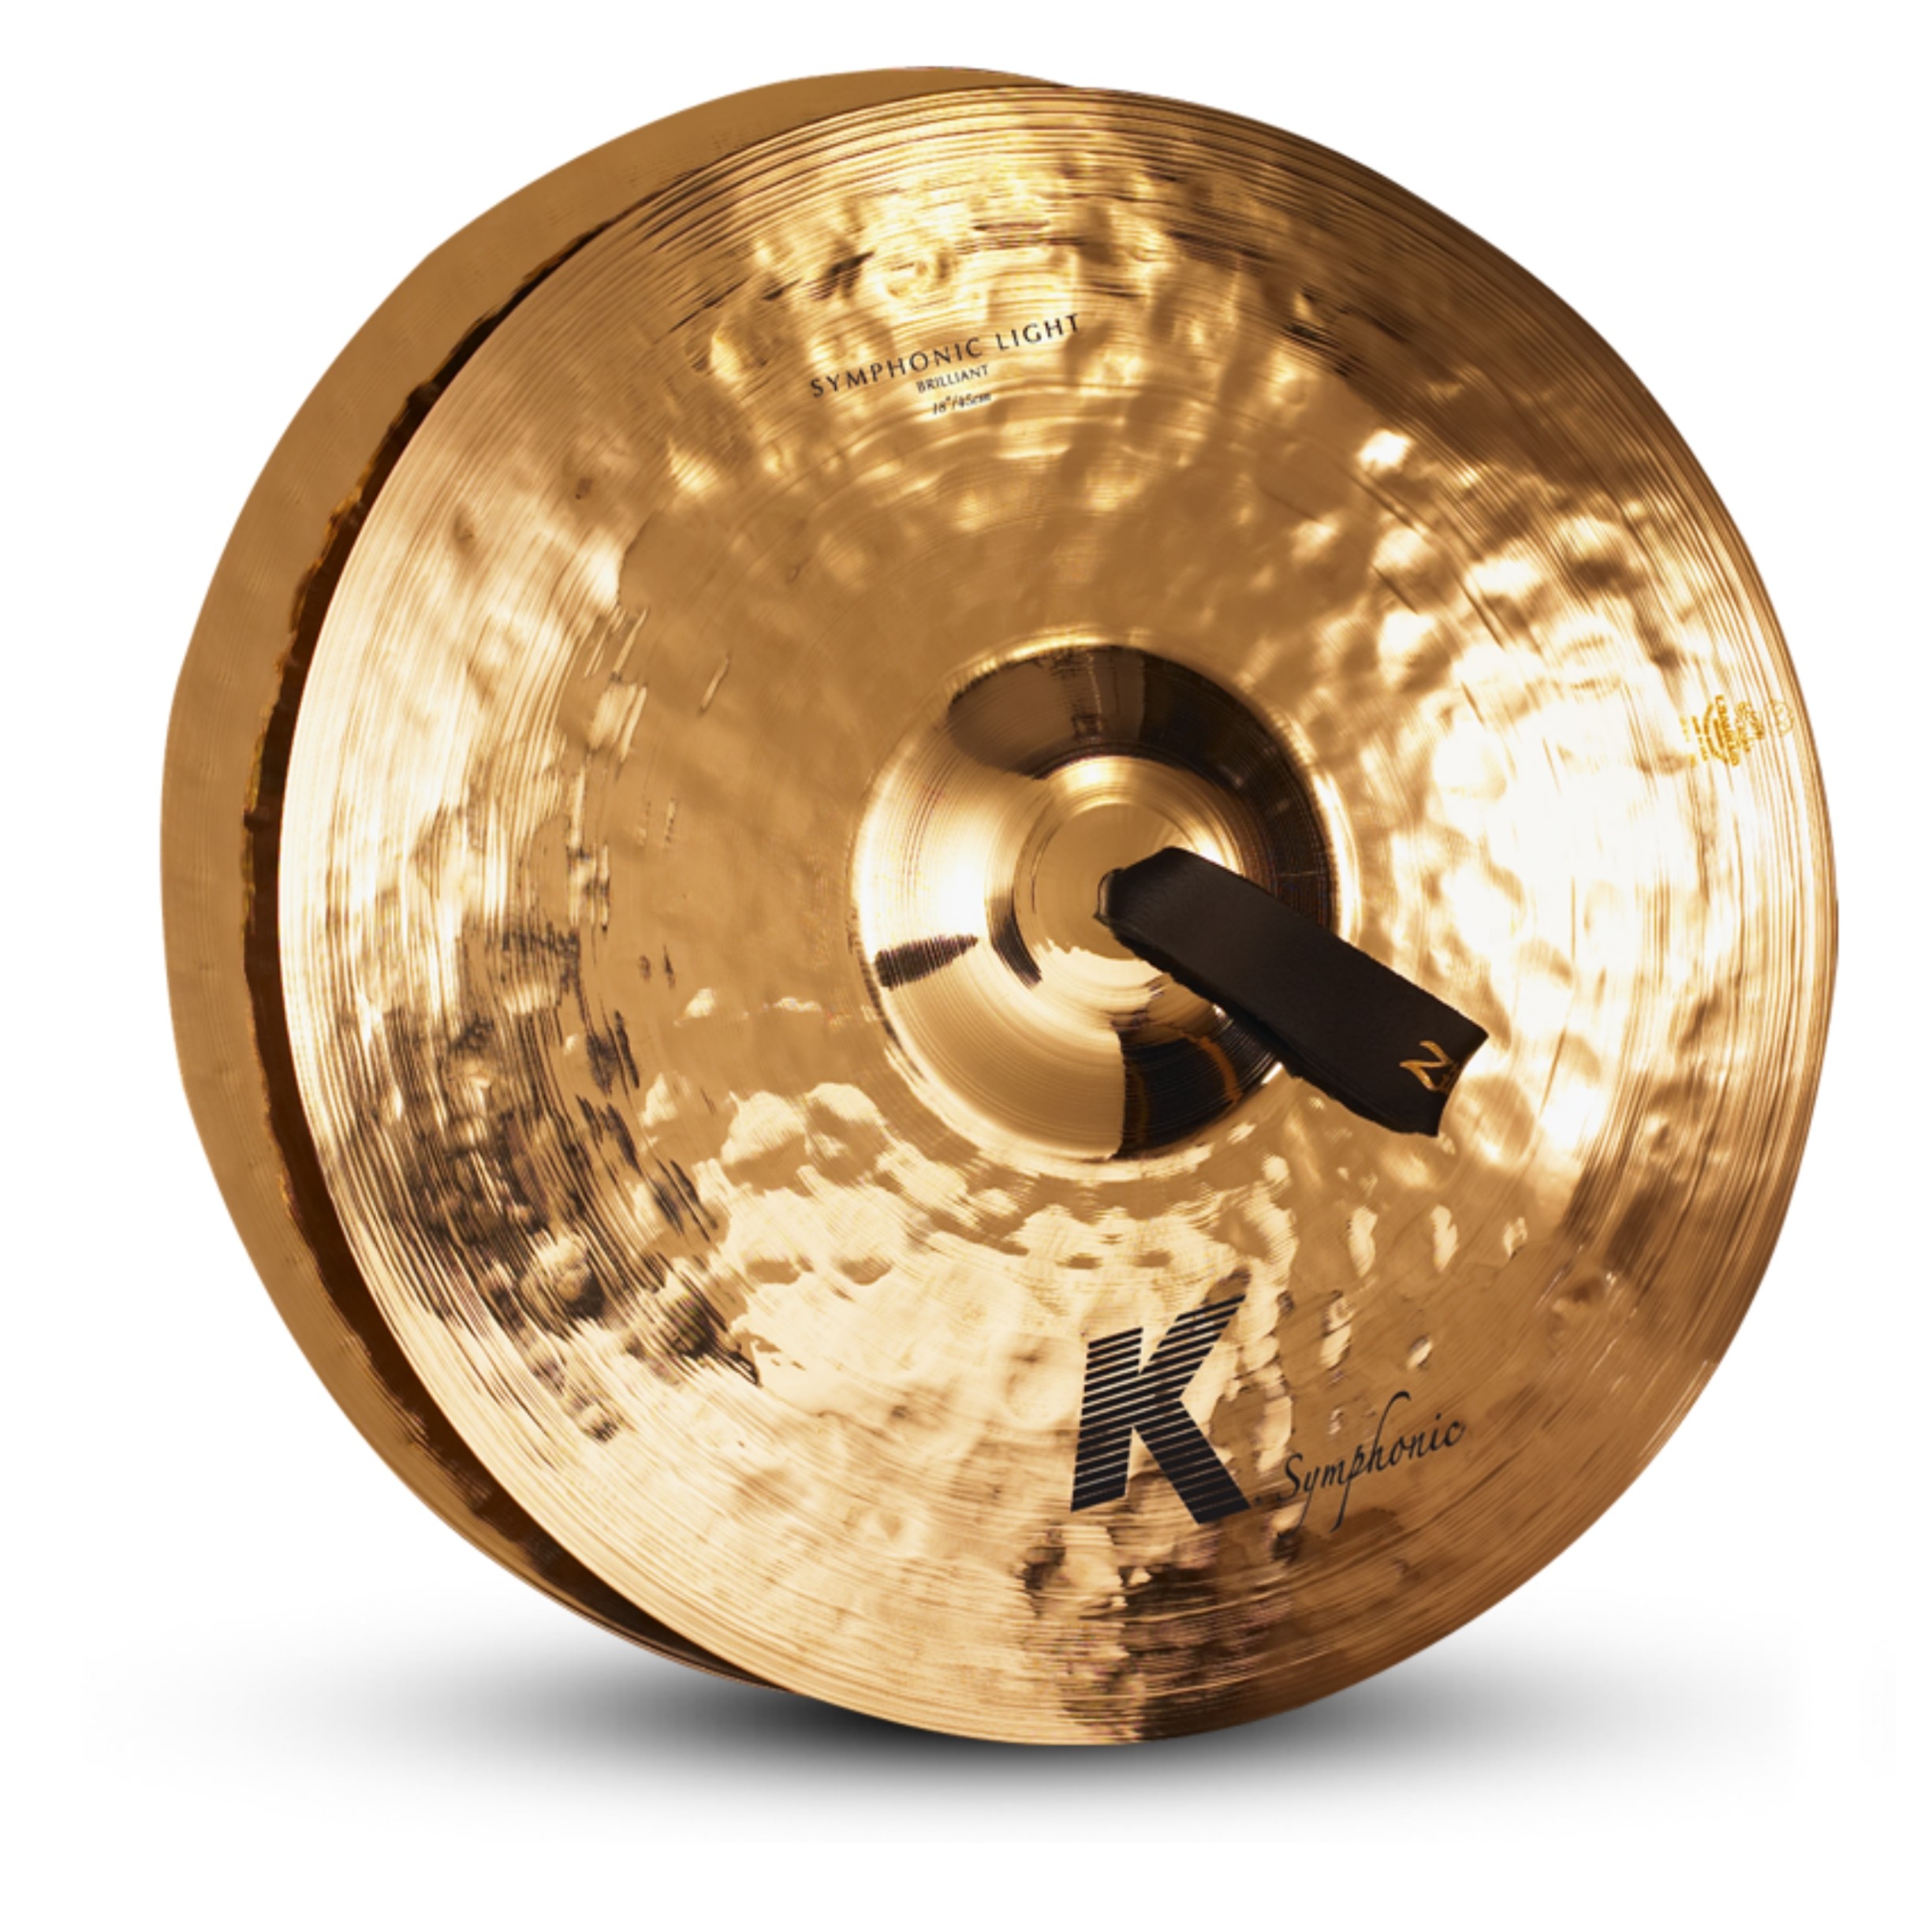 Zildjian 18" K Symphonic Brilliant Light Cymbals